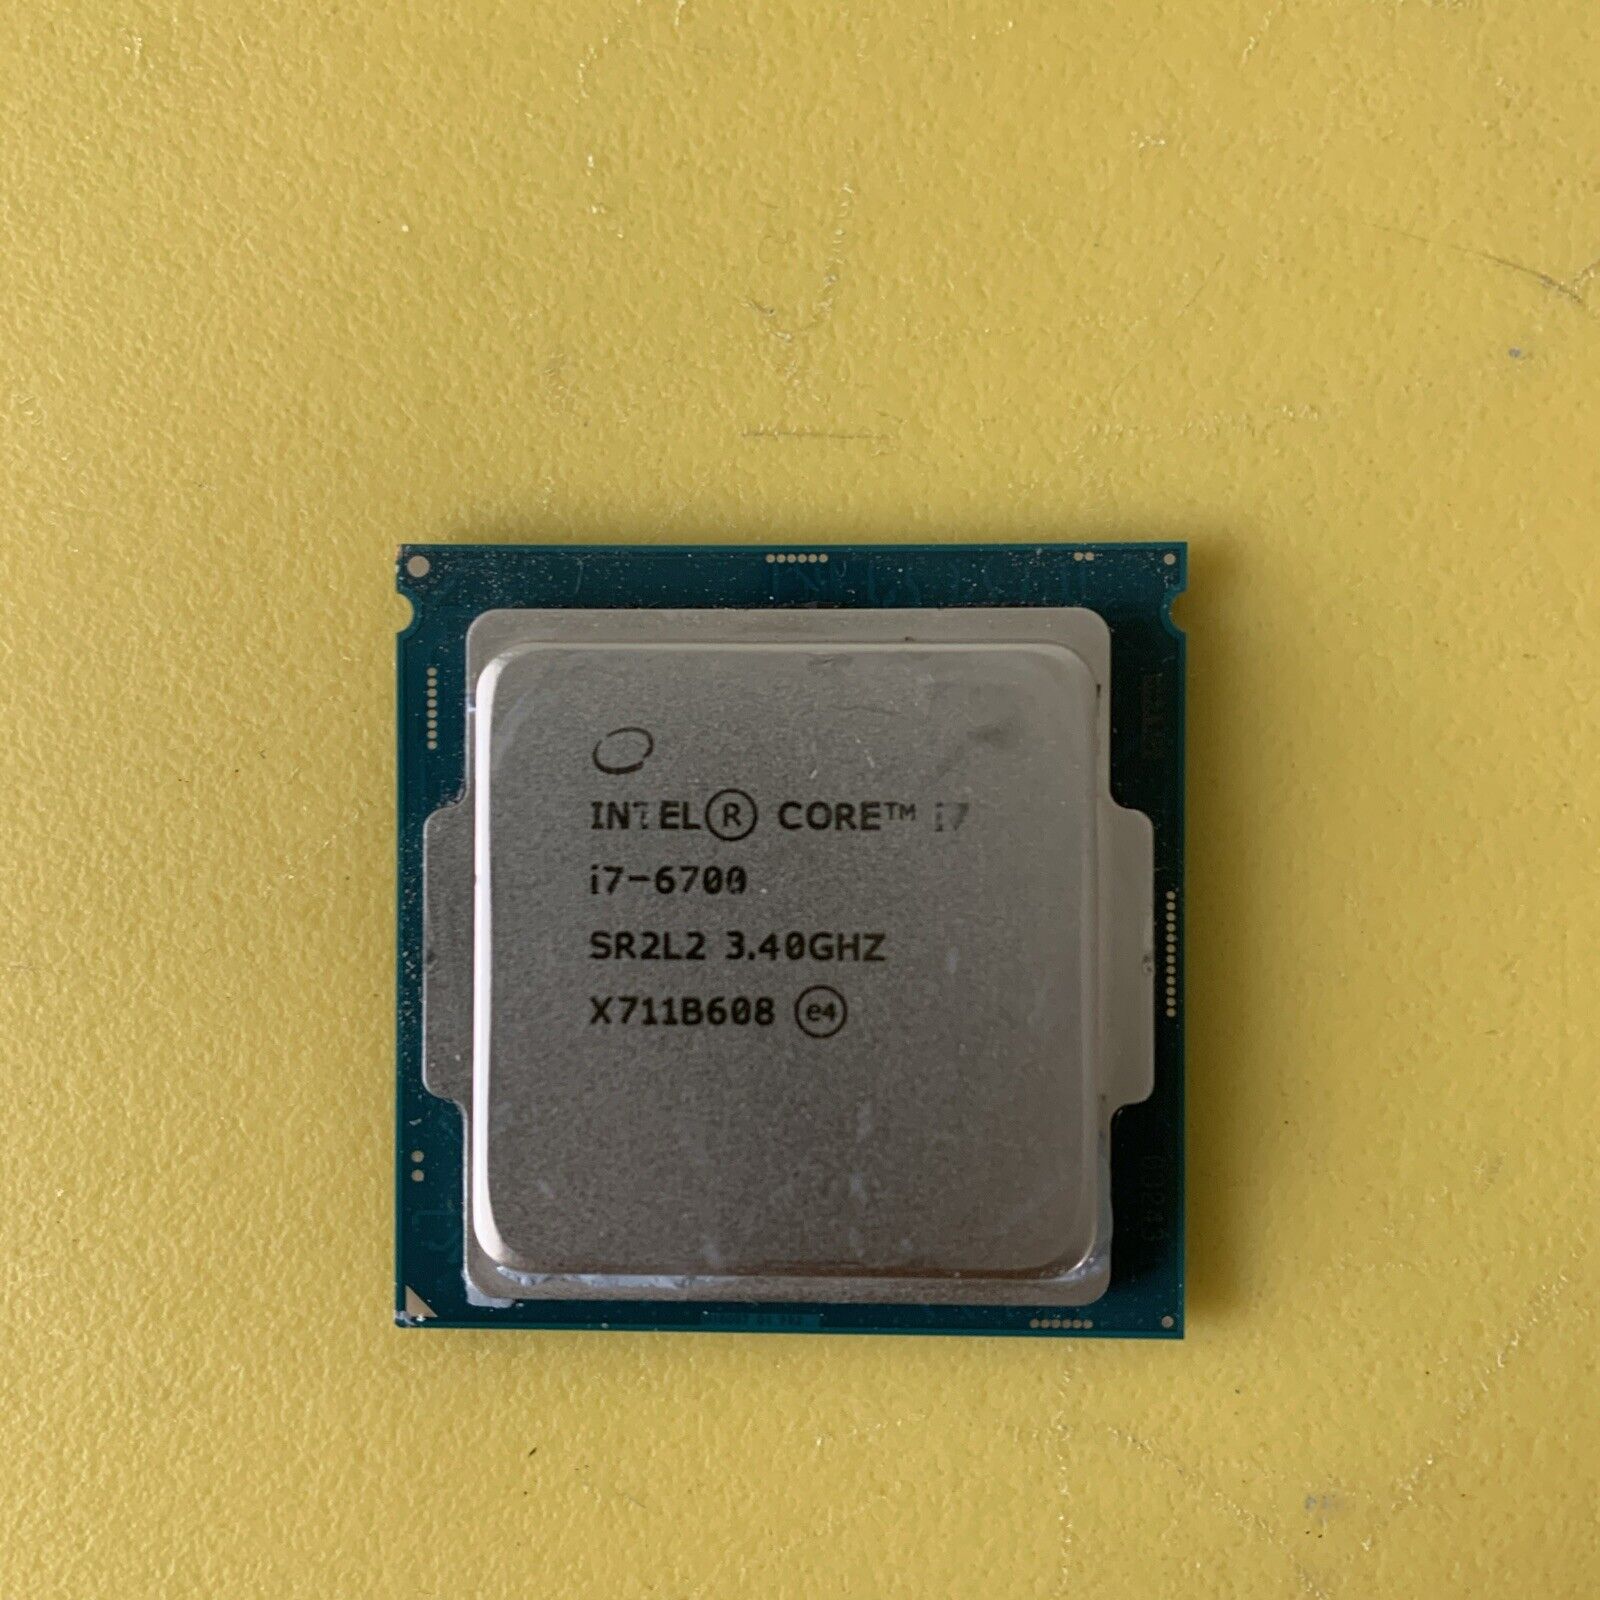 Intel Core i7-6700 3.40 GHz SR2L2 CPU Quad-Core Processor - Tested